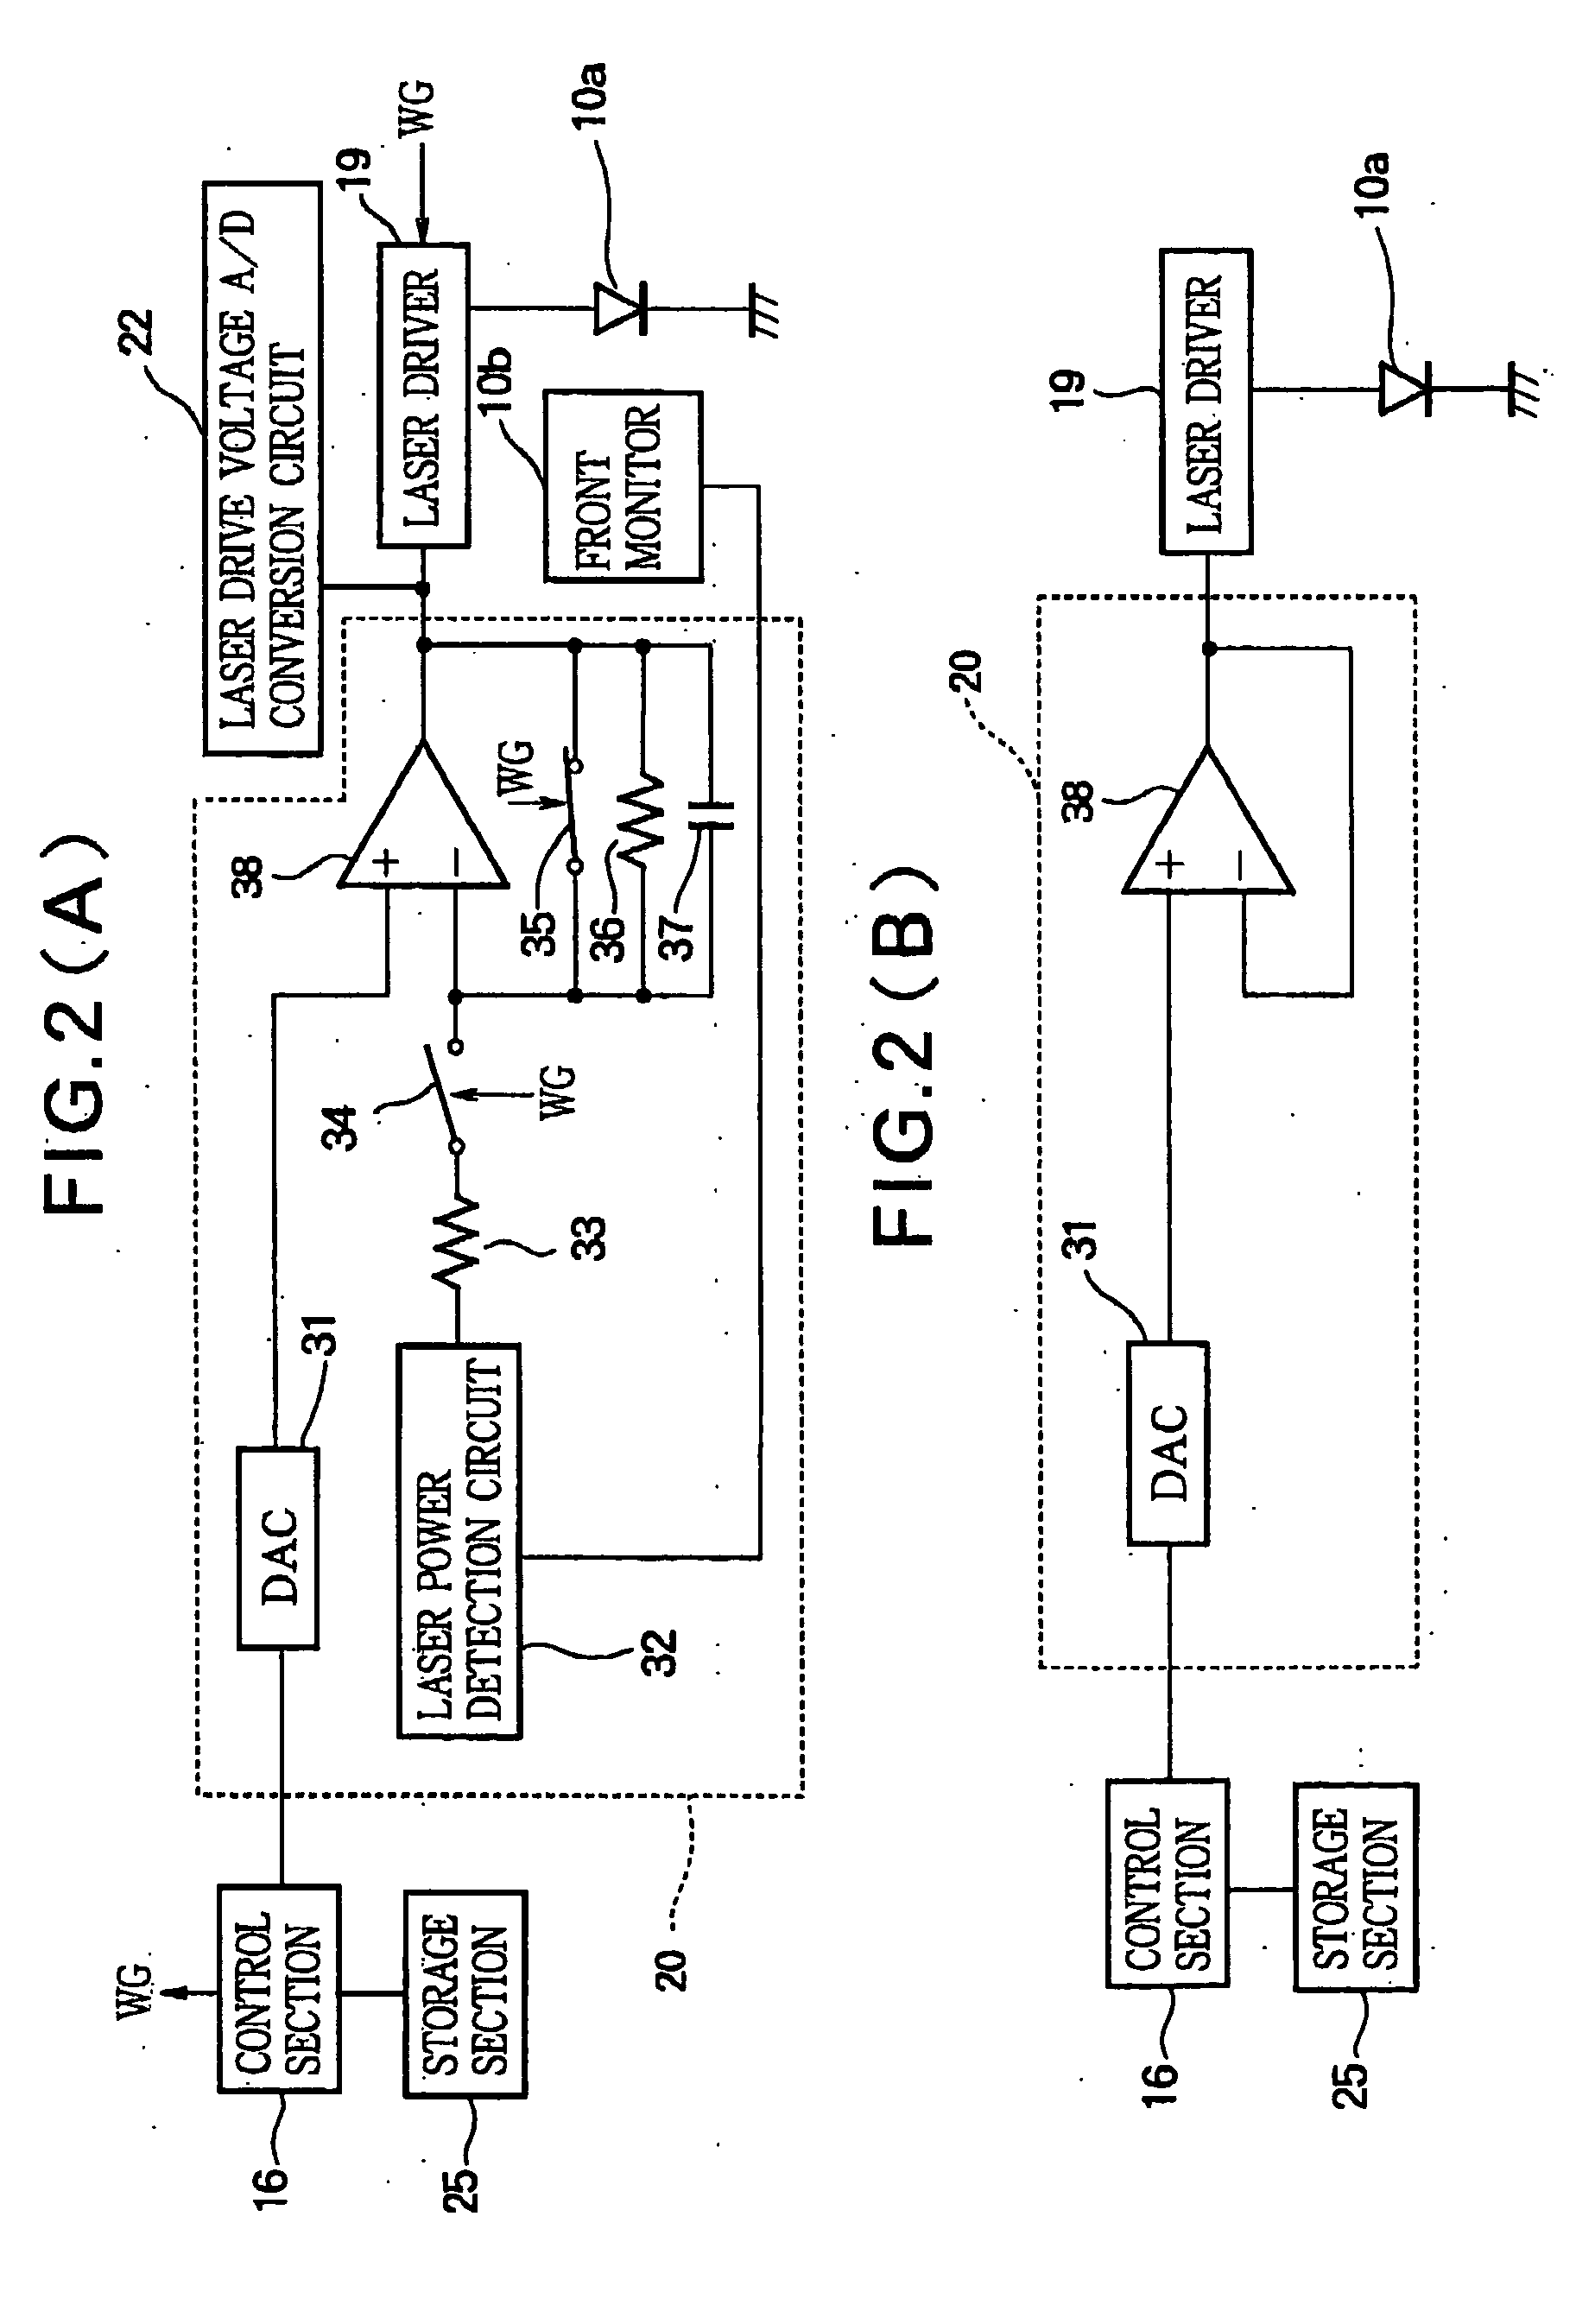 Optical disk recording apparatus and program